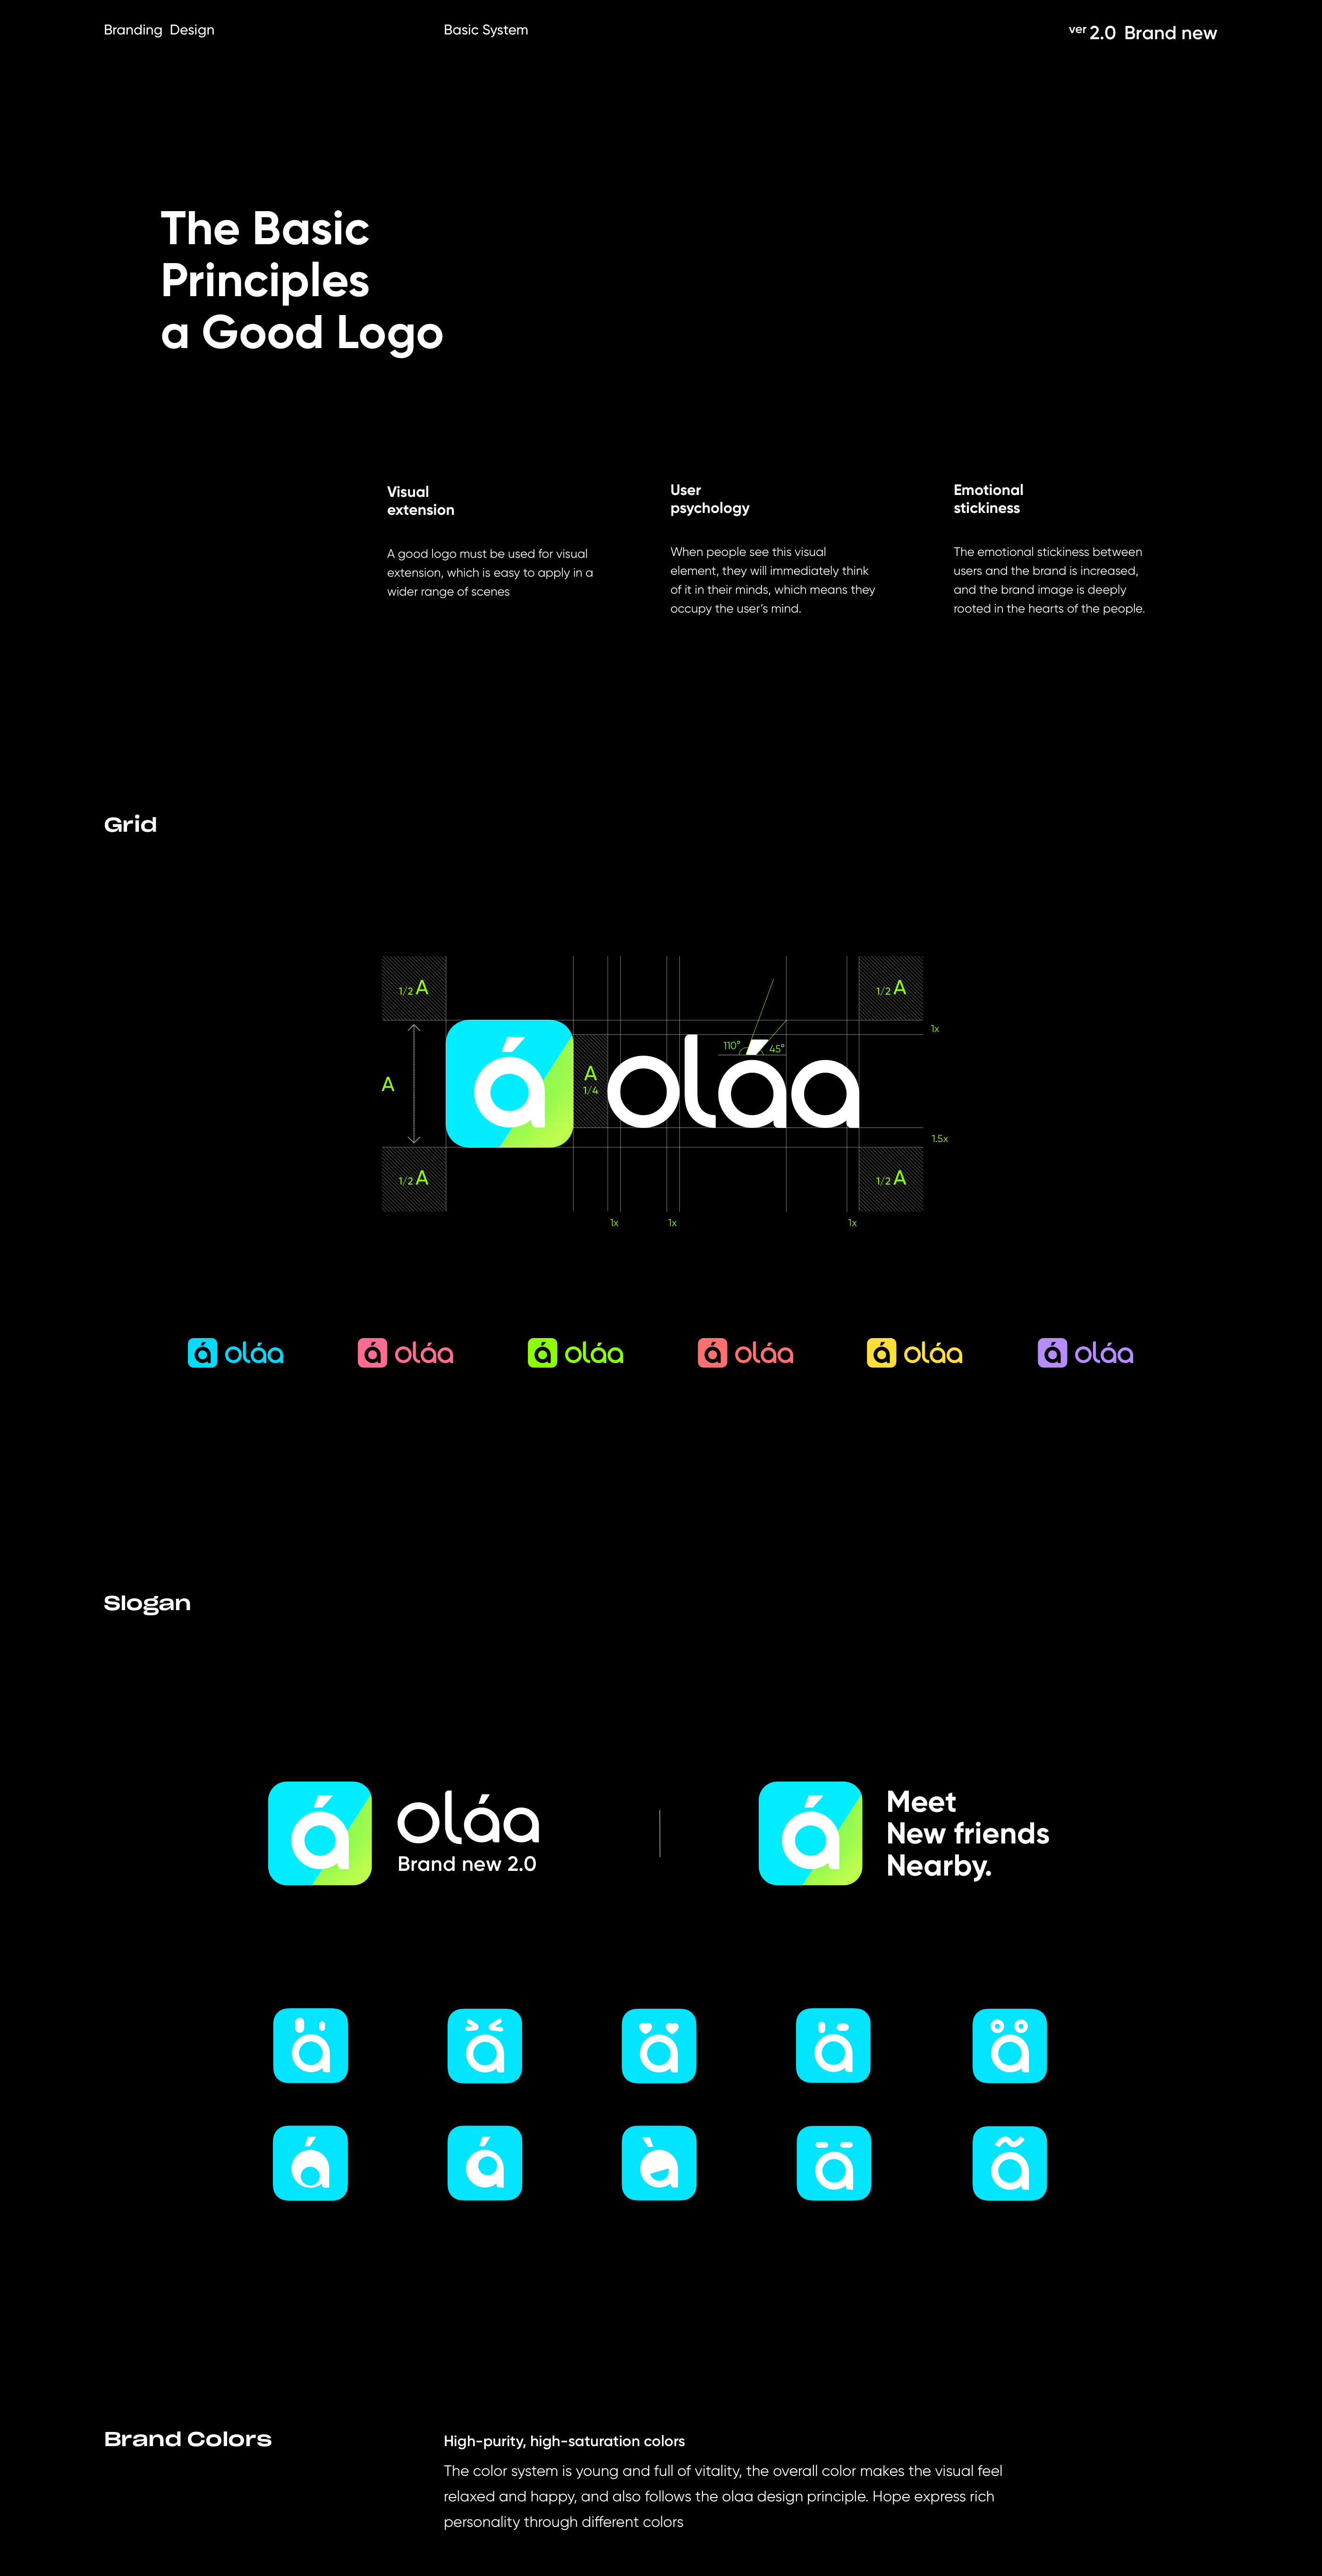 olaa-海外LBS社交平台